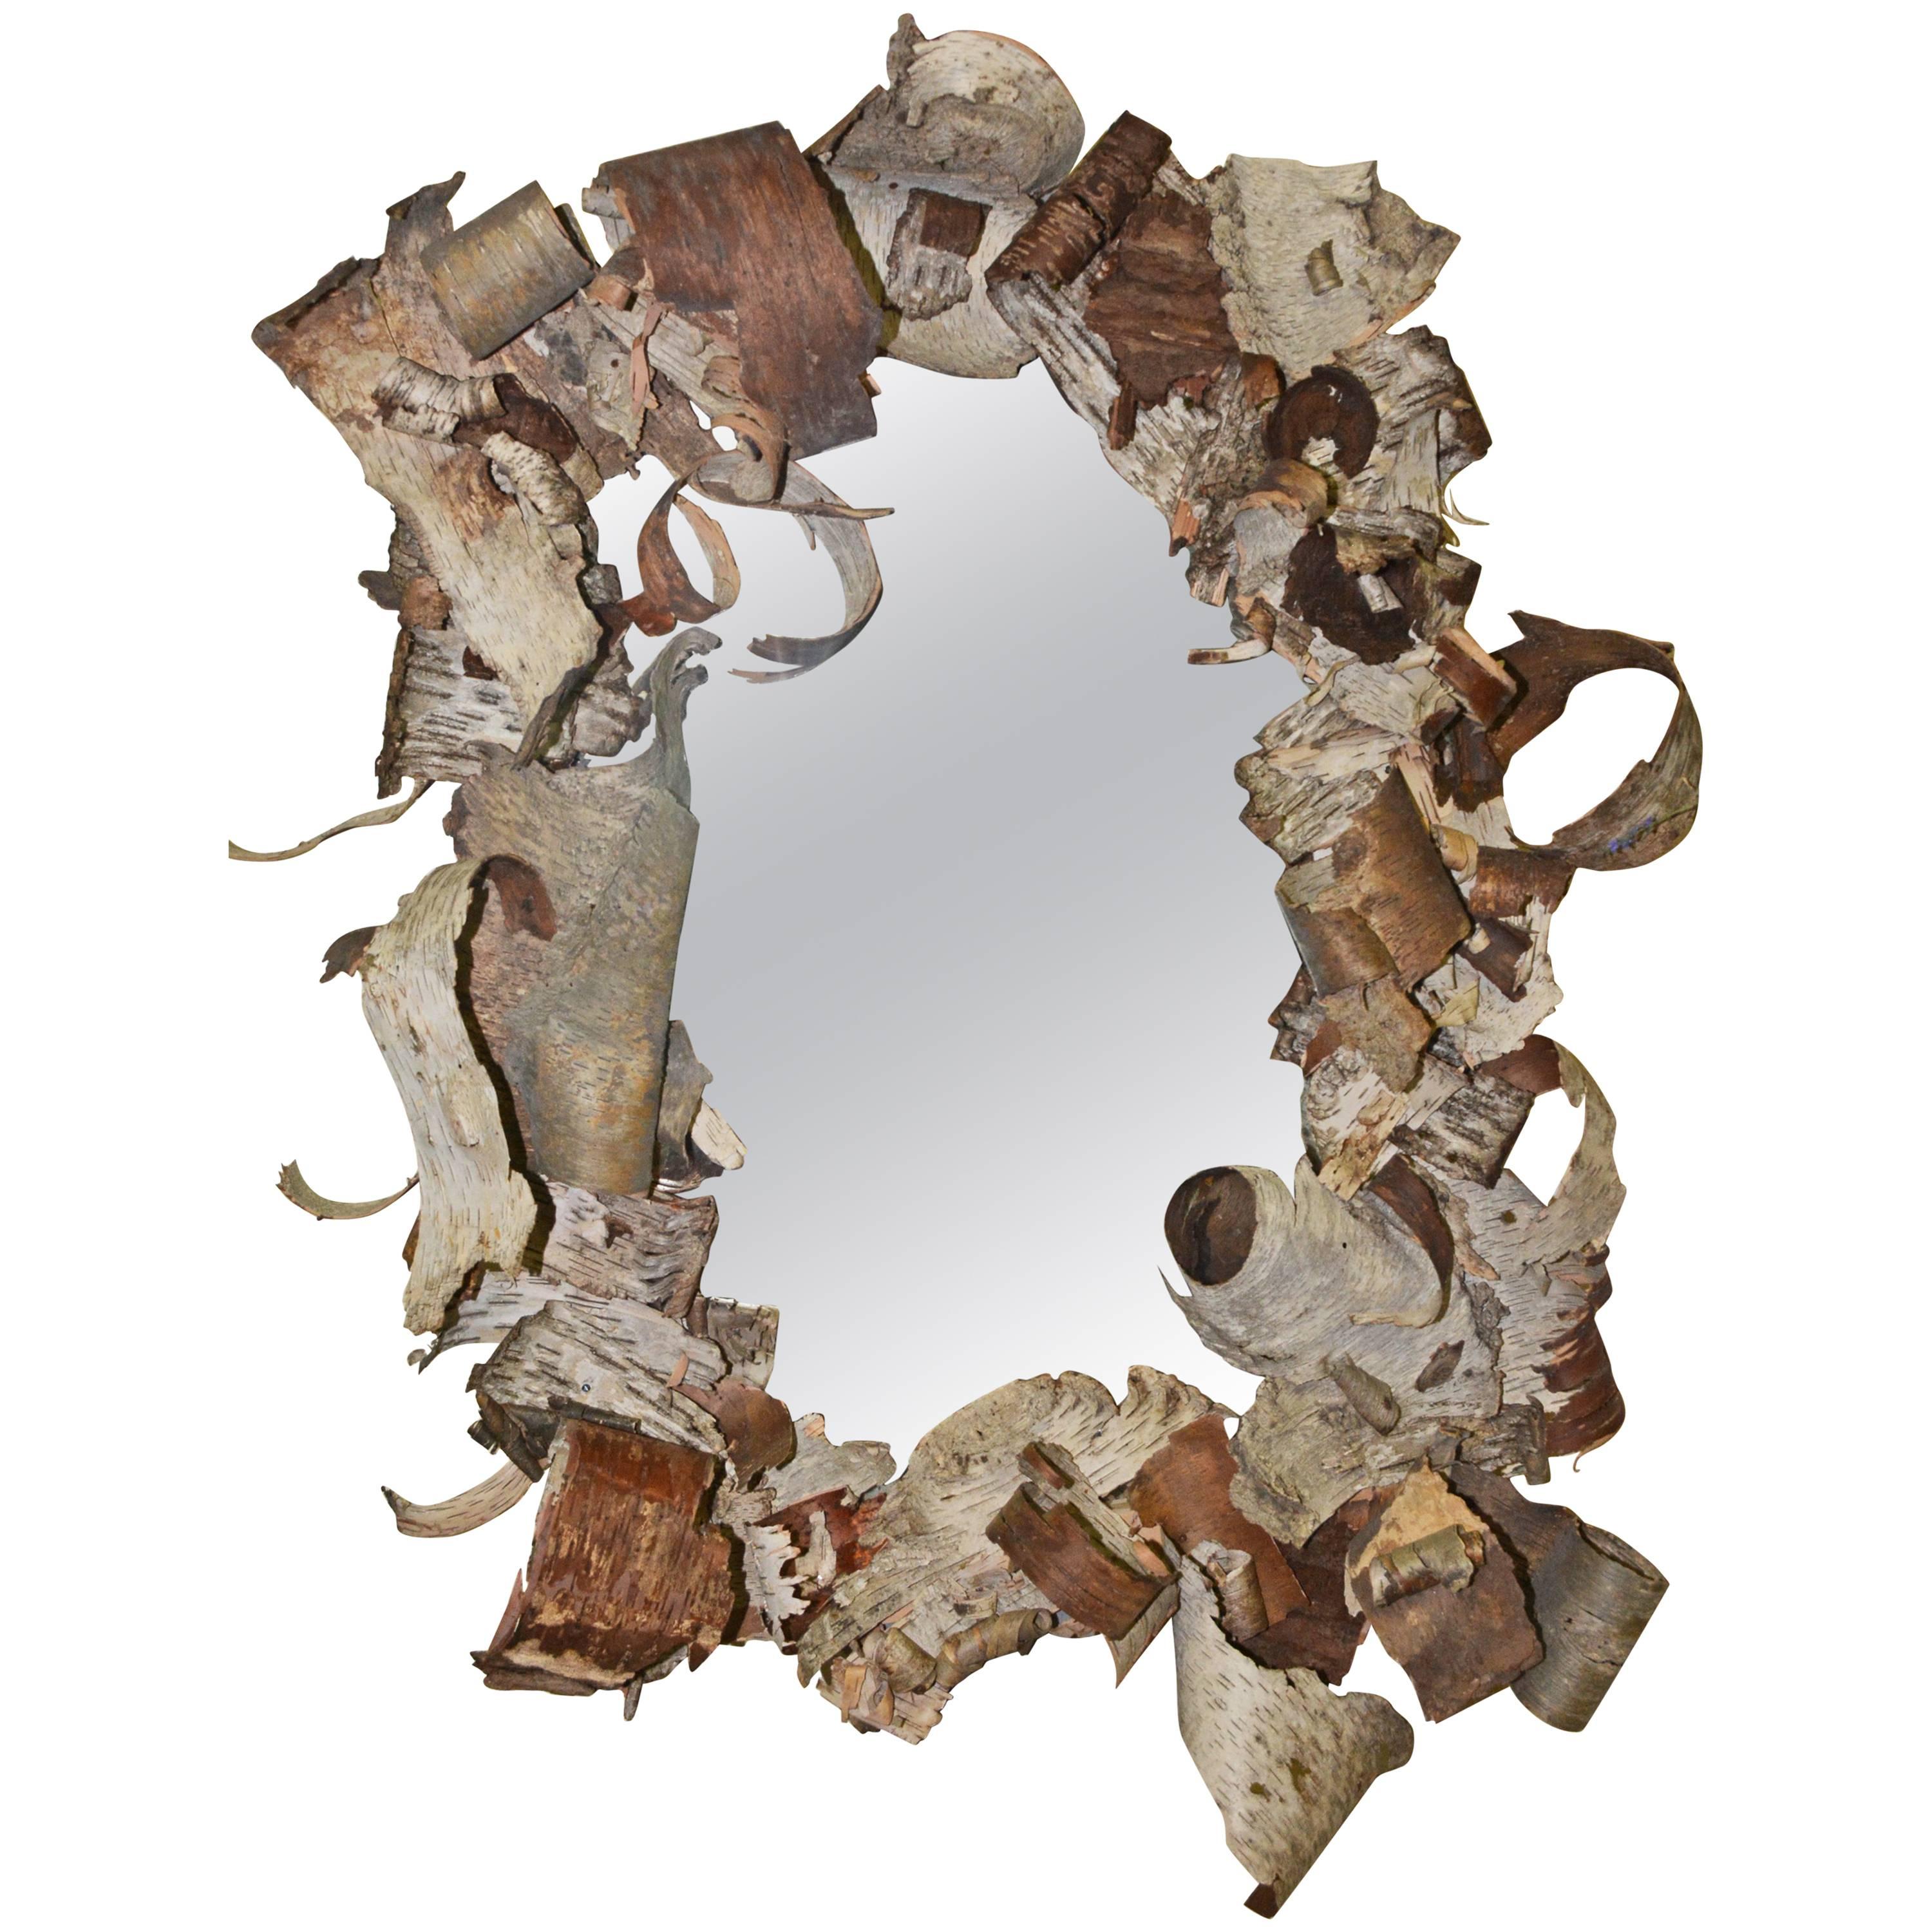 Rustic Curled Birch Bark Mirror